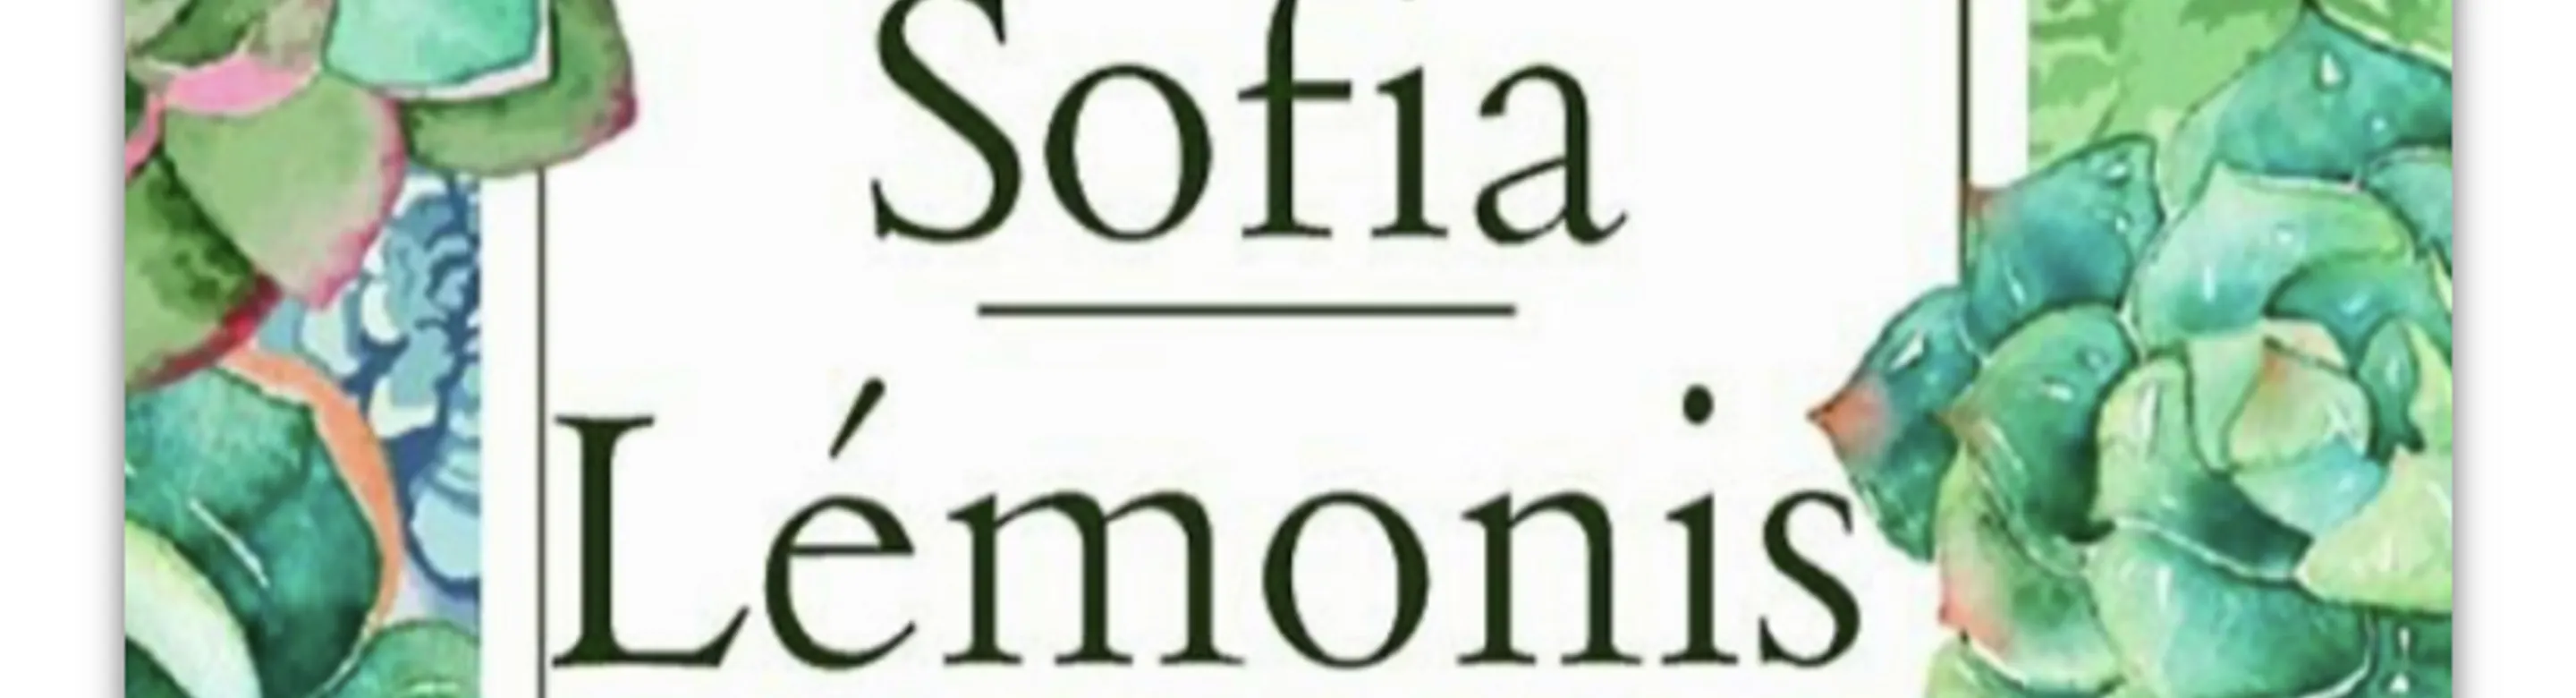 Sofia Lemonis Botanical and Cosmetics